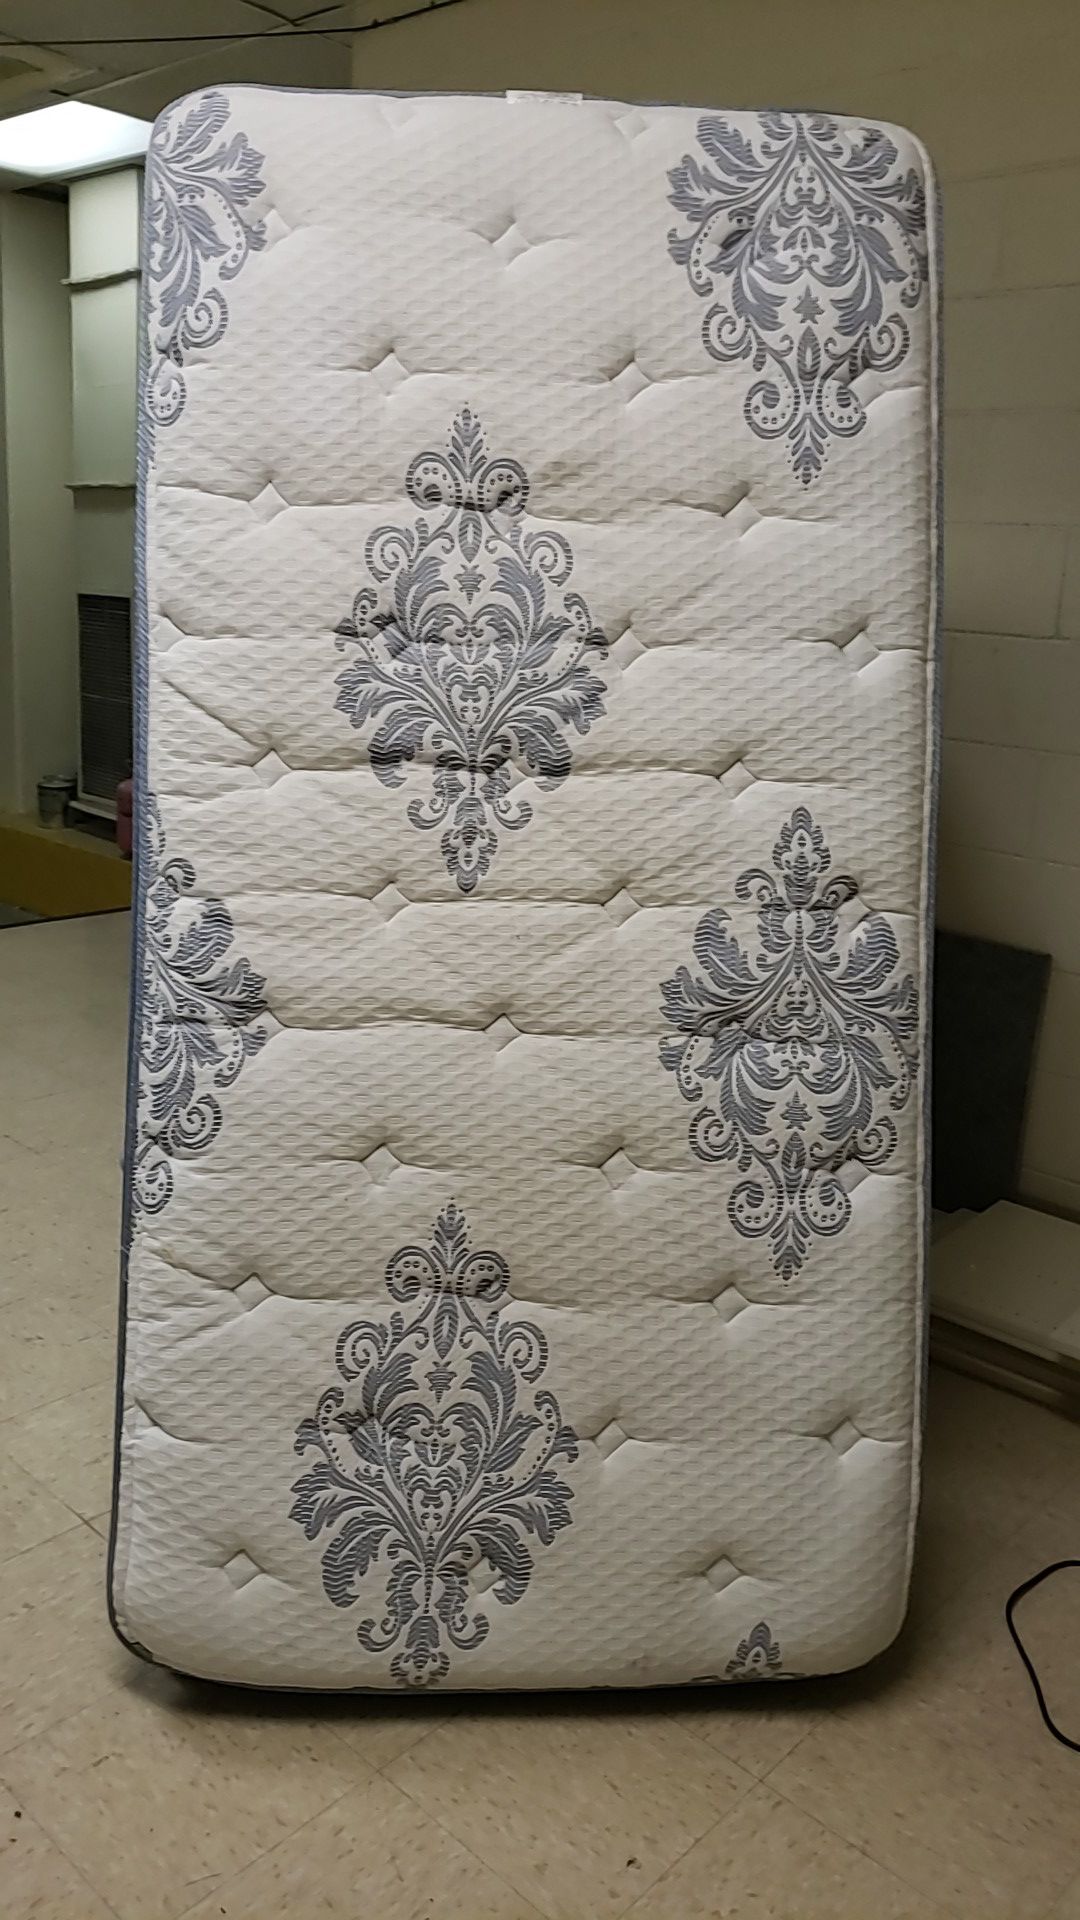 Twin size bed mattress